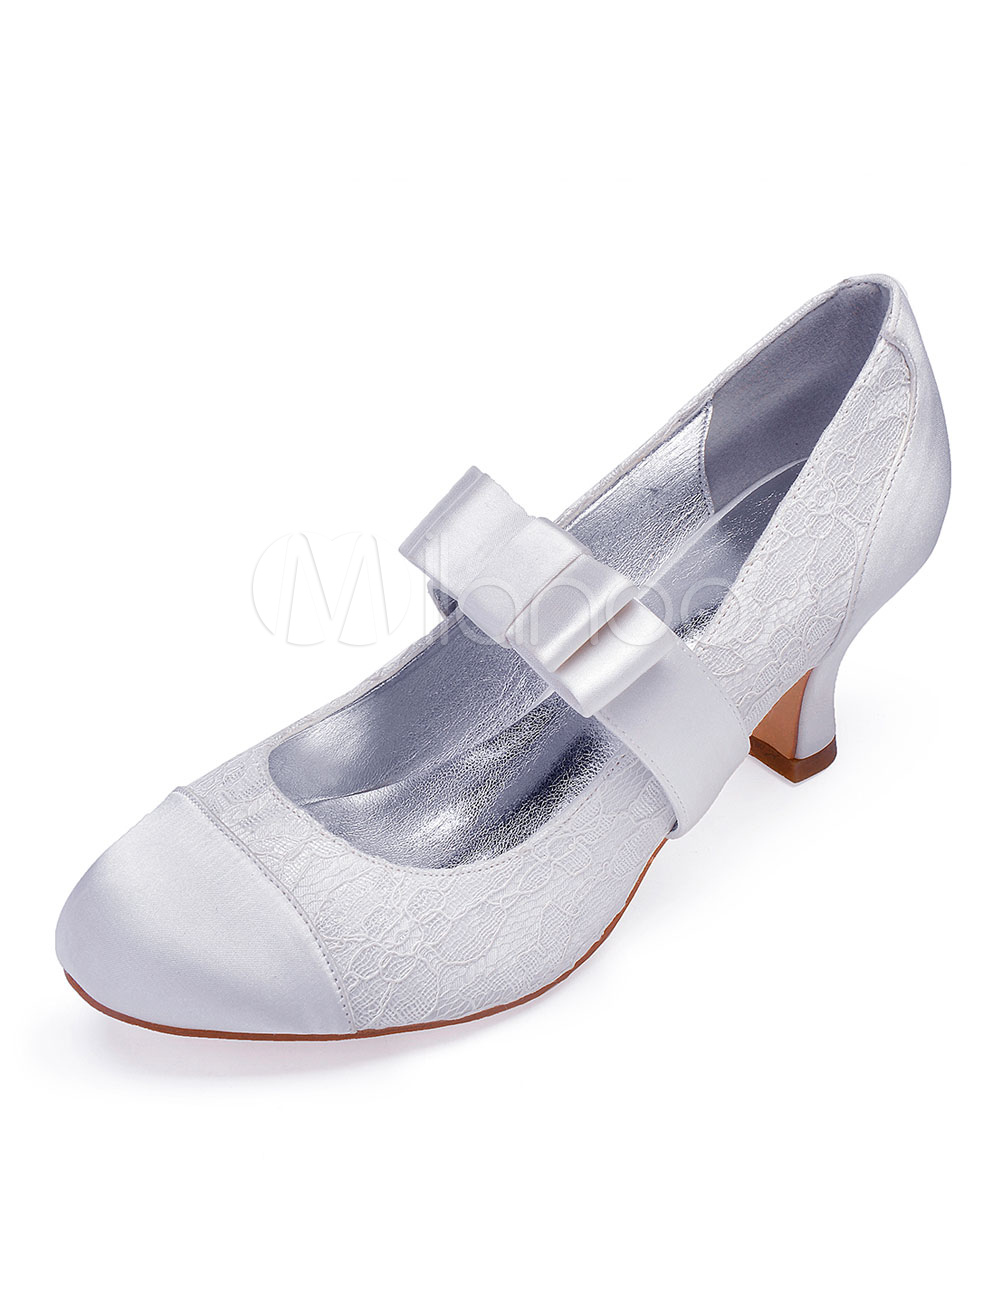 white satin mary jane shoes